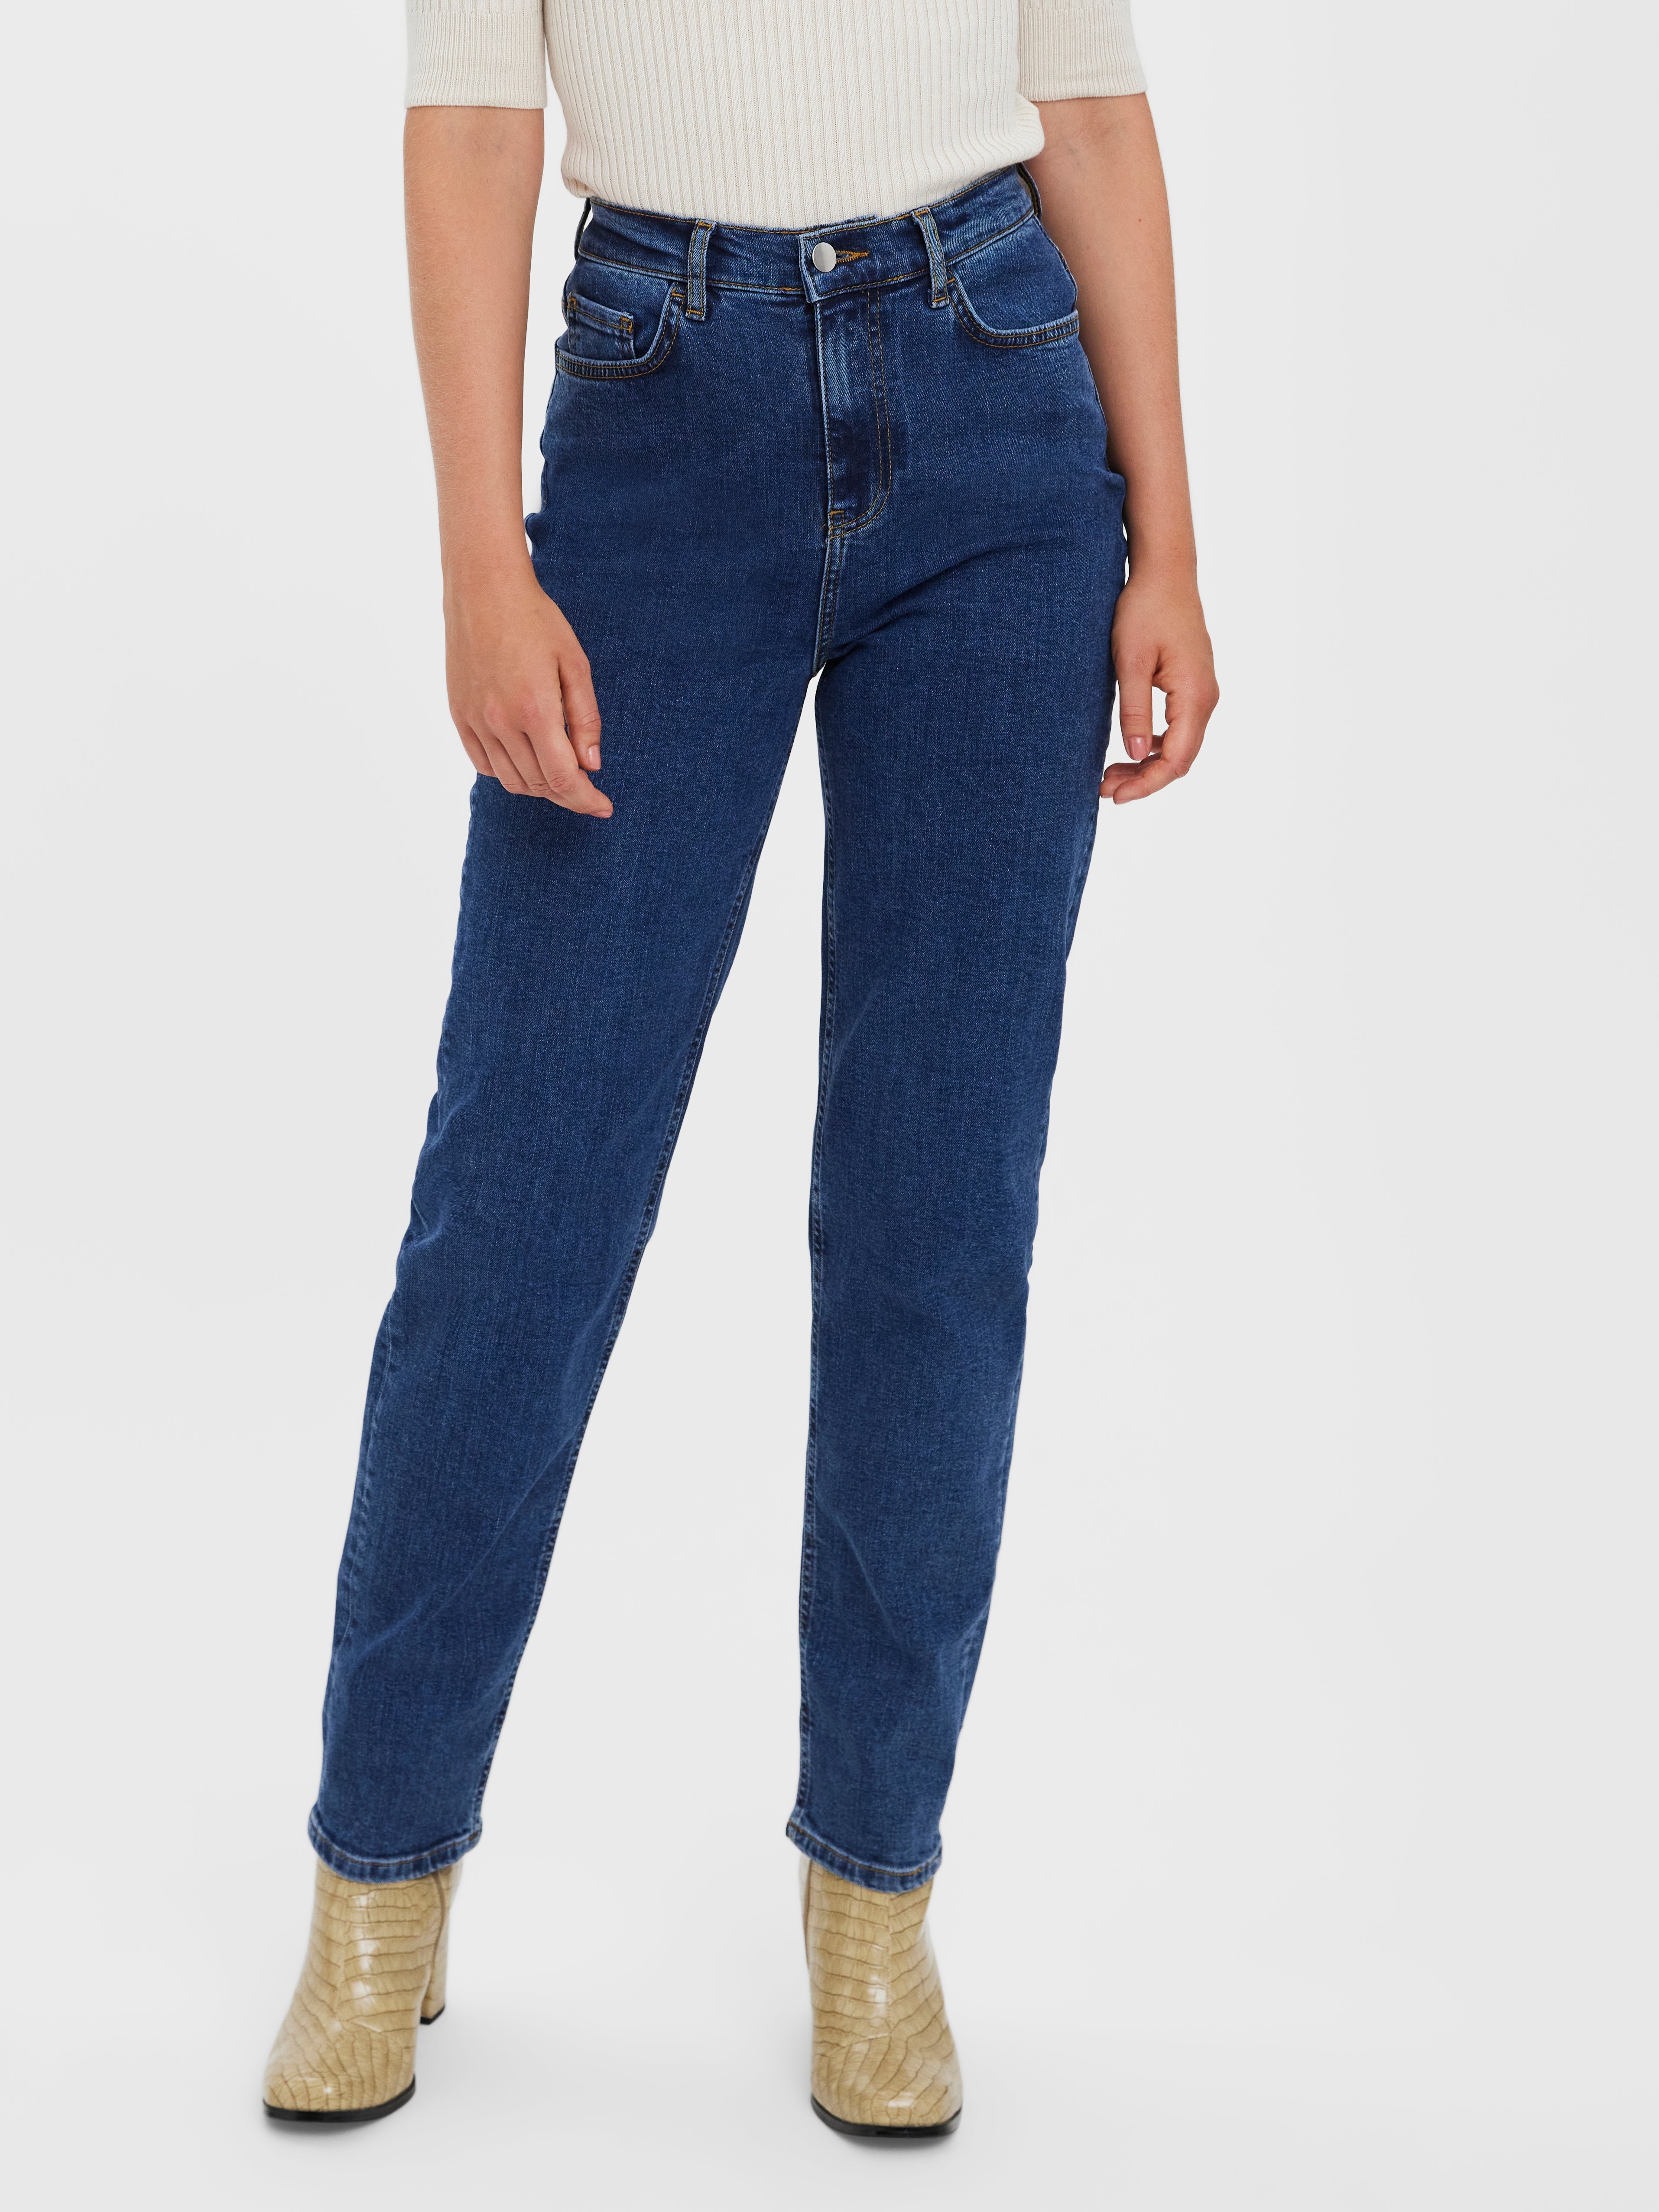 Lilla Conform Svække Mom Fit Jeans | StyleSearch